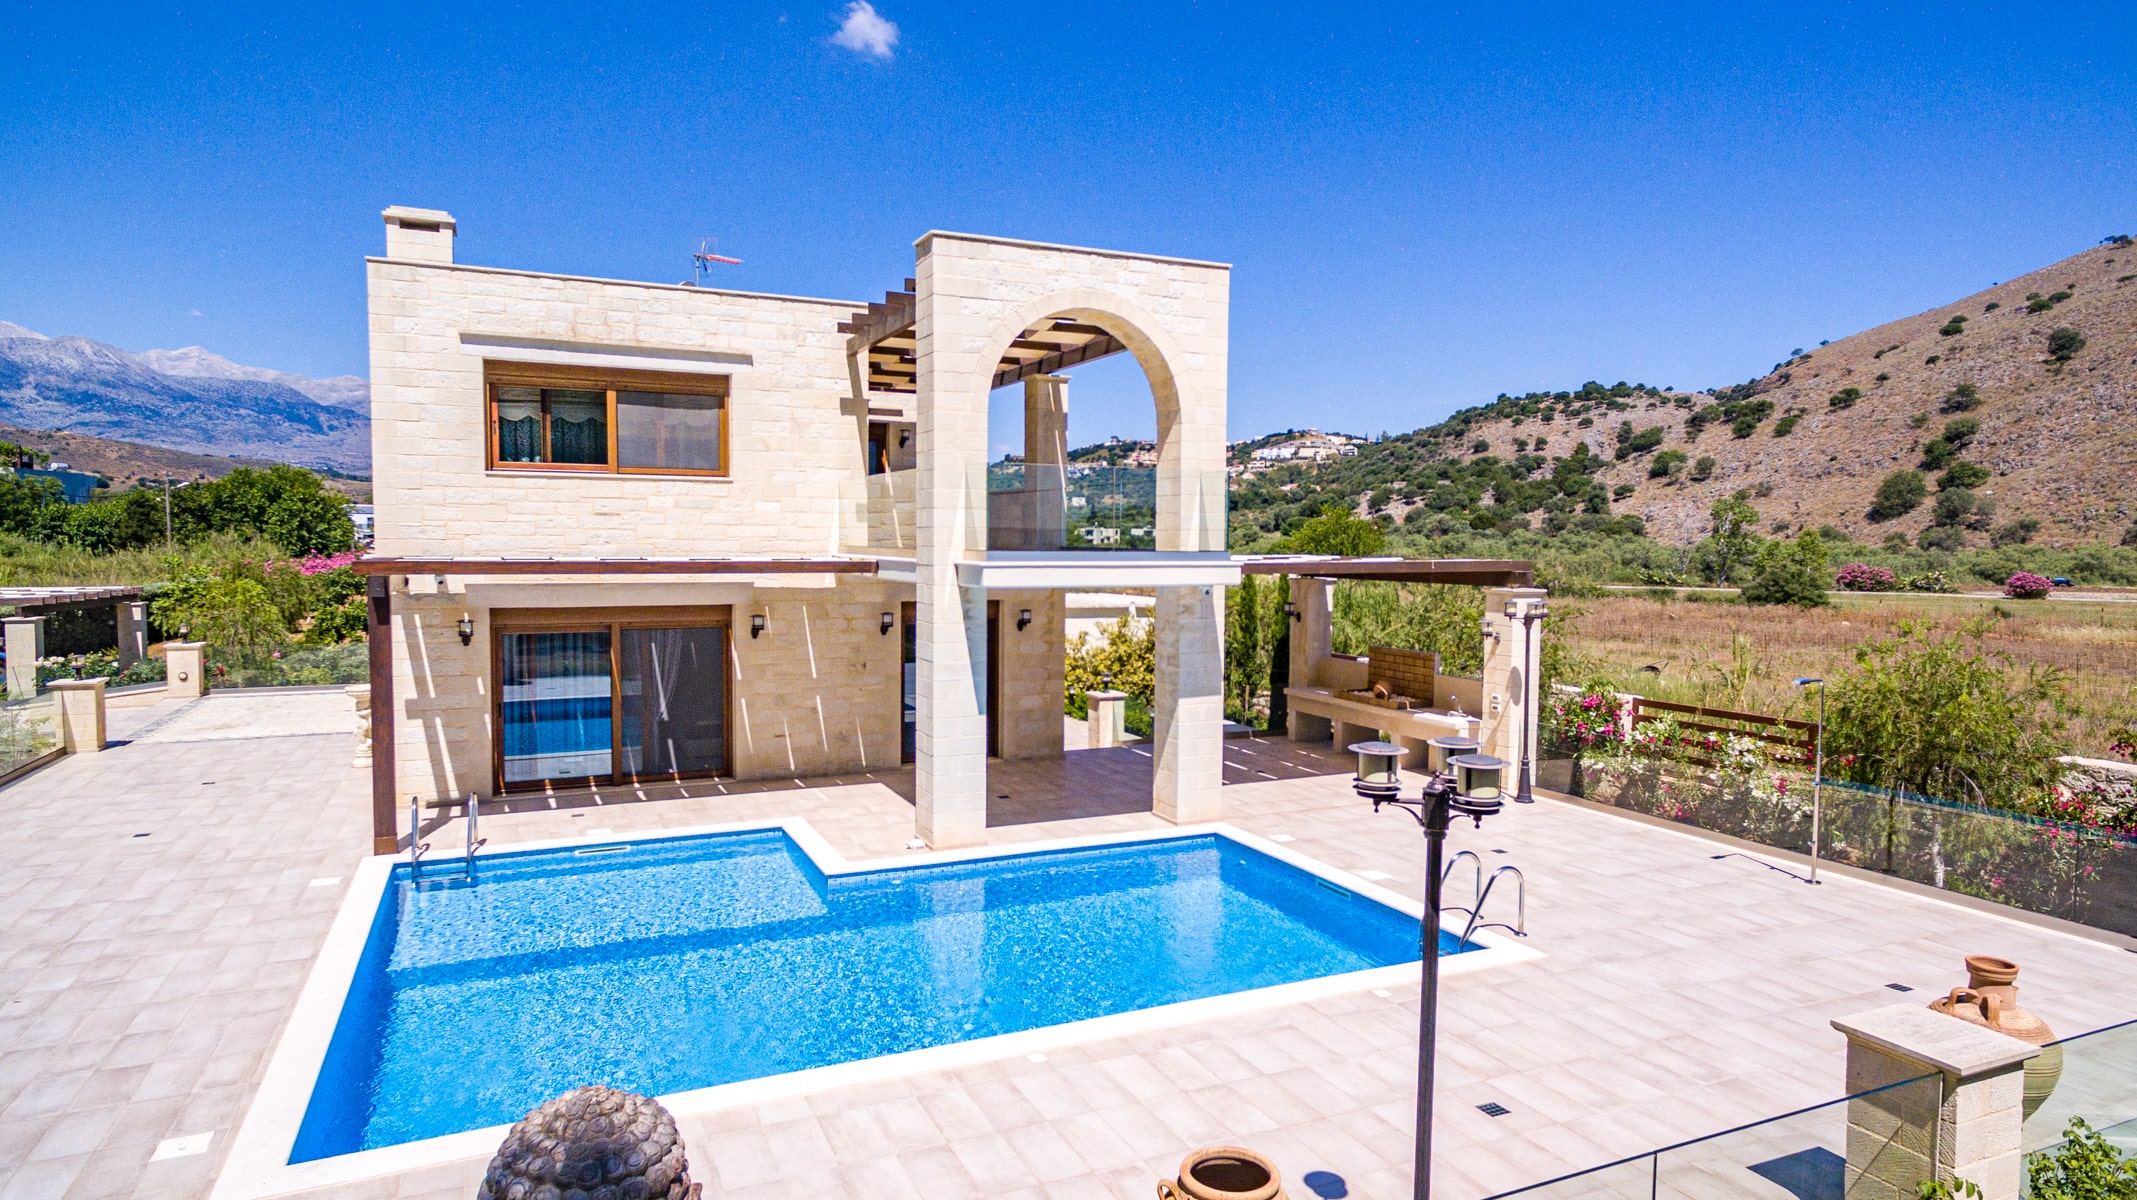 Stone houses for sale in Crete- Kyriakidis Construction Company- Stone Villa